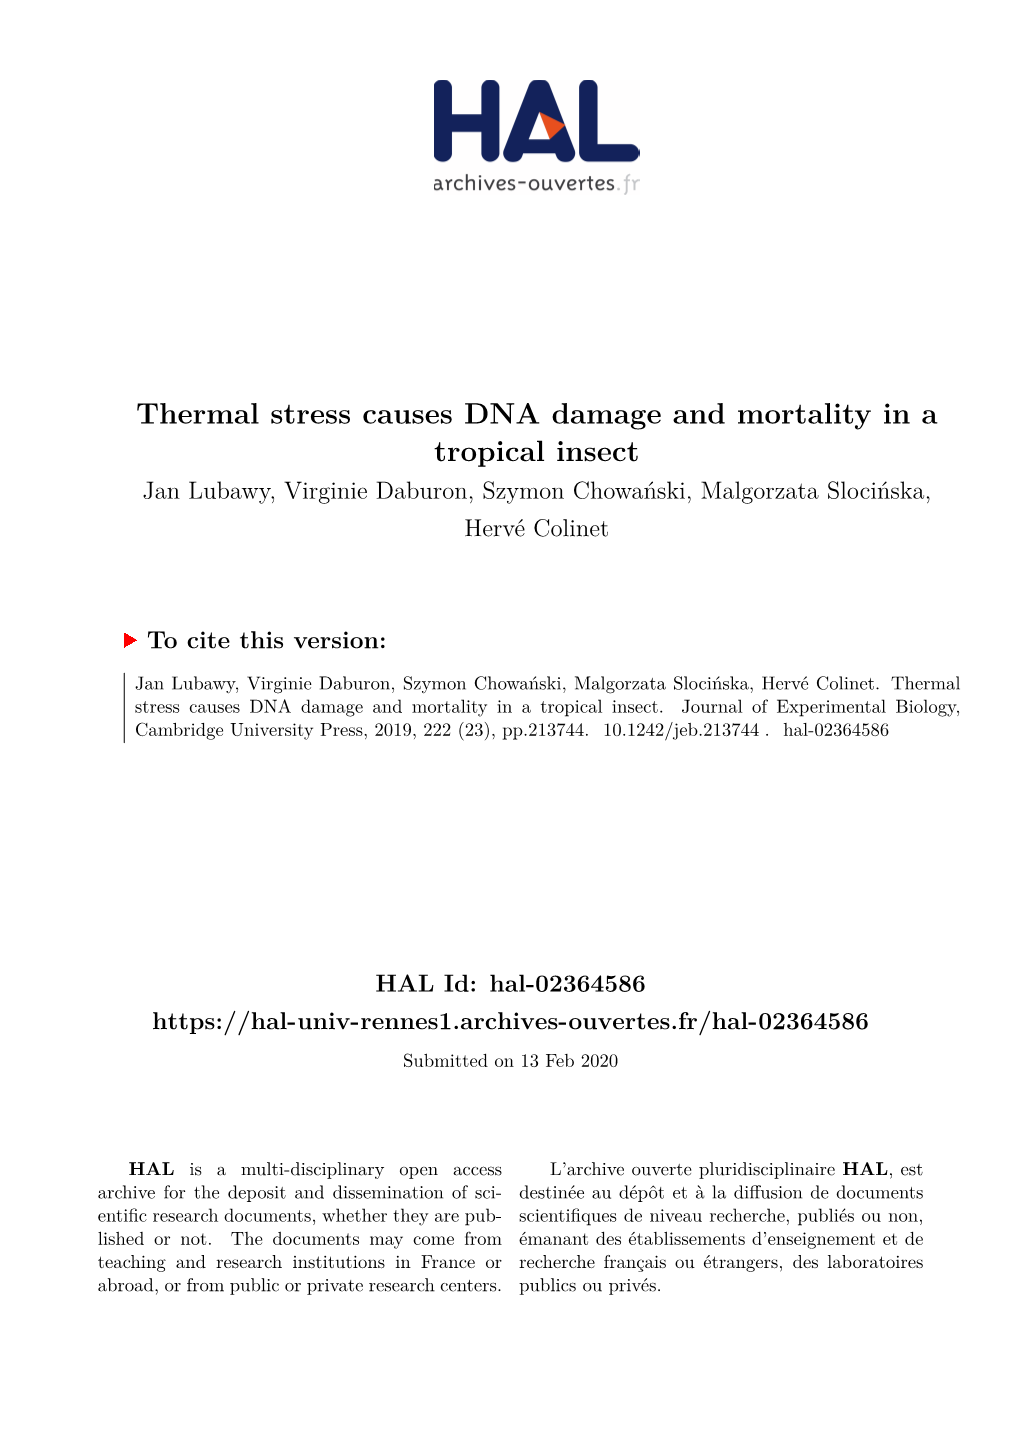 Thermal Stress Causes DNA Damage and Mortality in a Tropical Insect Jan Lubawy, Virginie Daburon, Szymon Chowański, Malgorzata Slocińska, Hervé Colinet